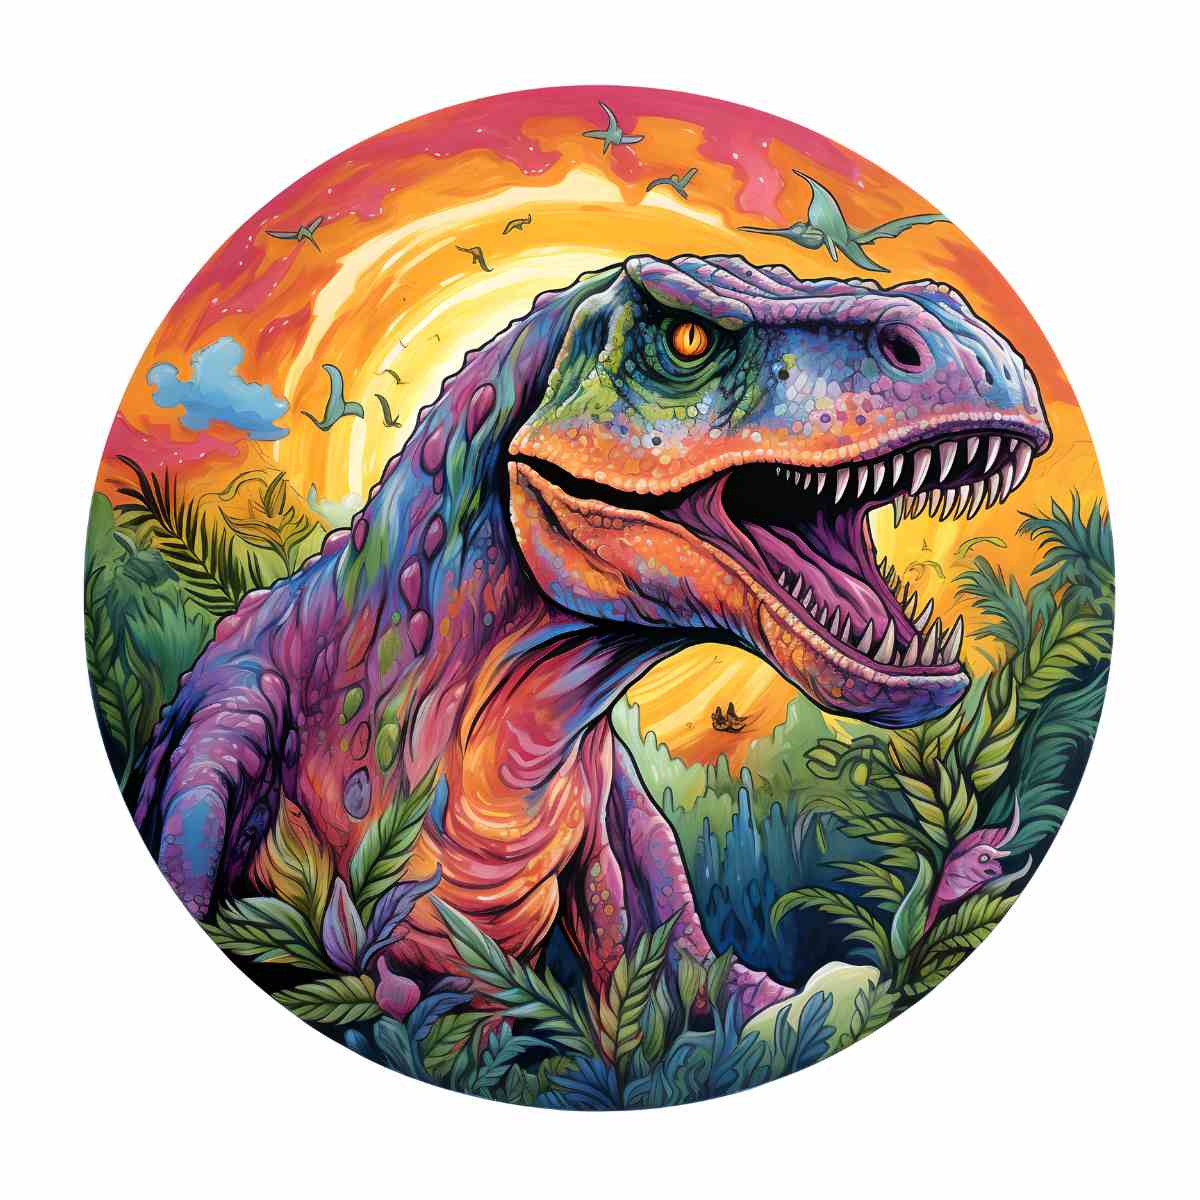 Dinosaure T-Rex - Puzzle